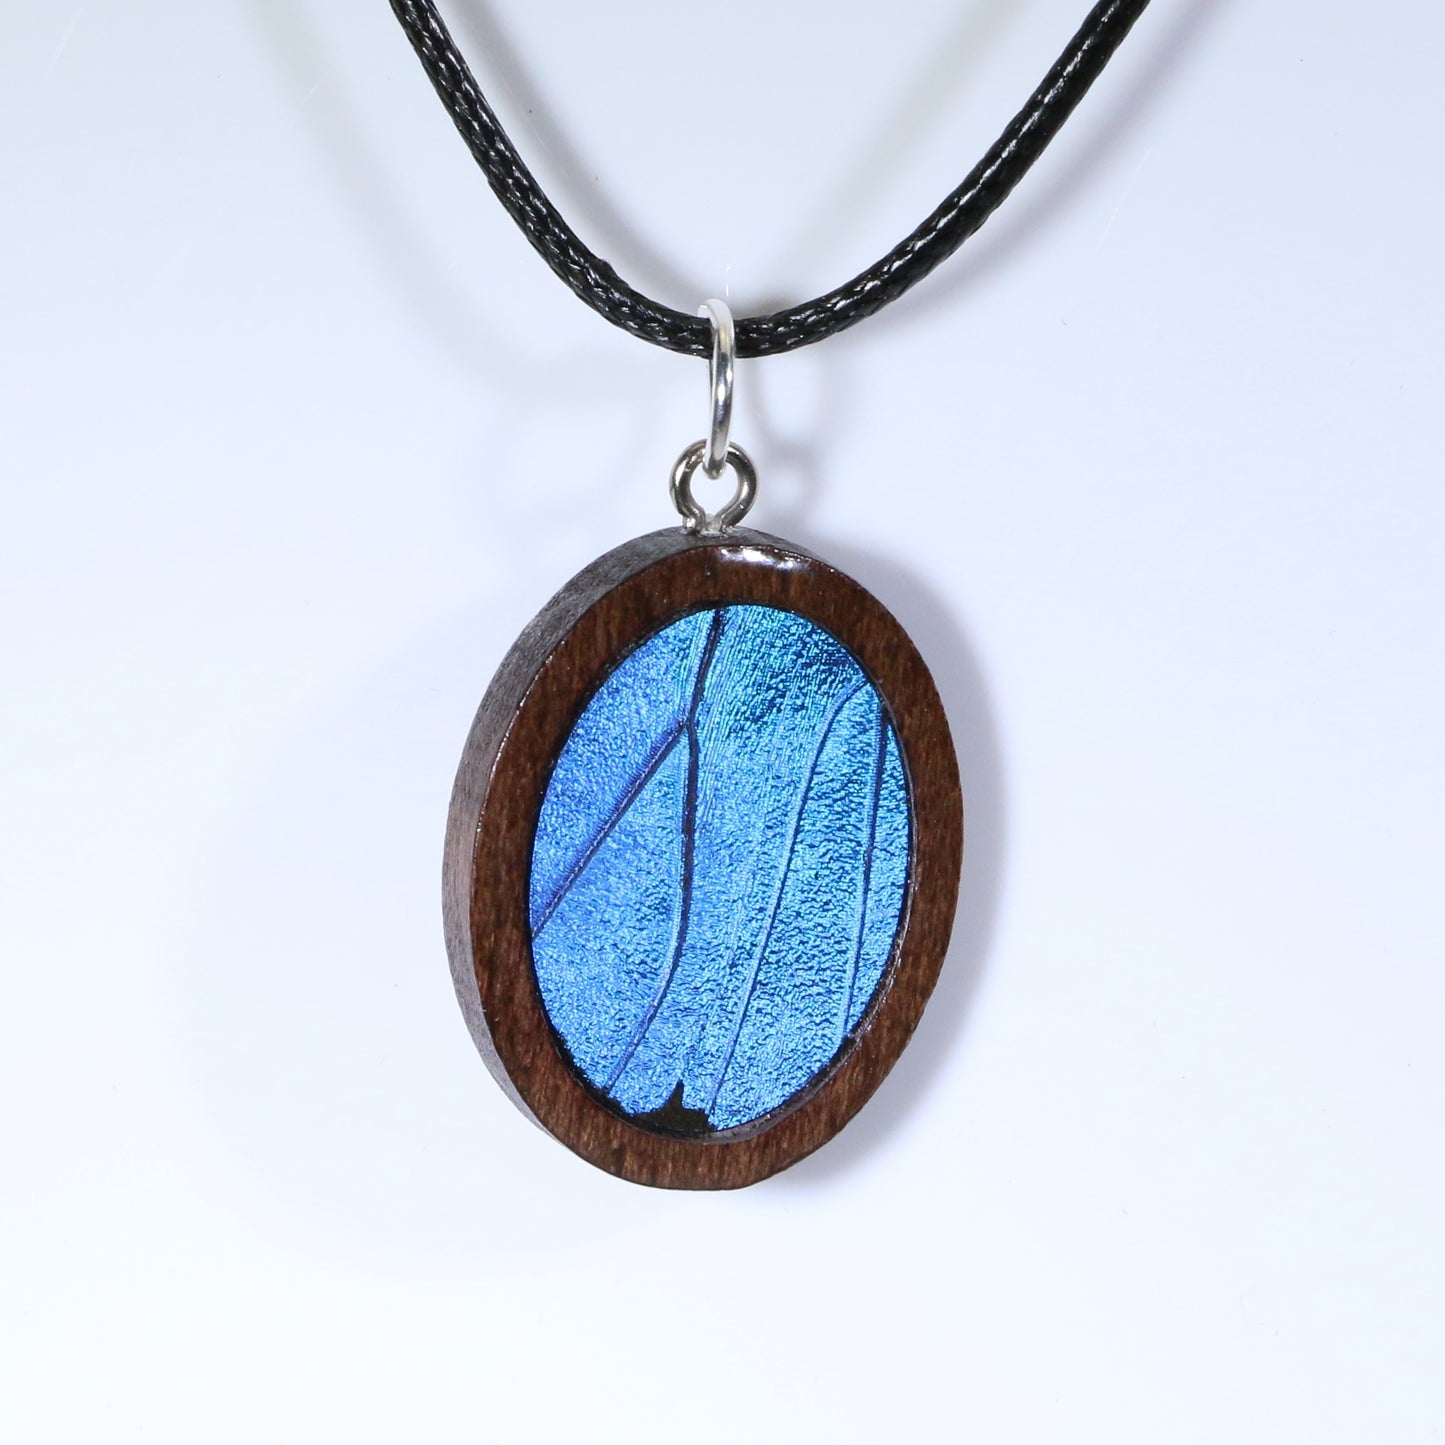 52611 - Real Butterfly Wing Jewelry - Pendant - Dark Wood - Oval - Blue Morpho